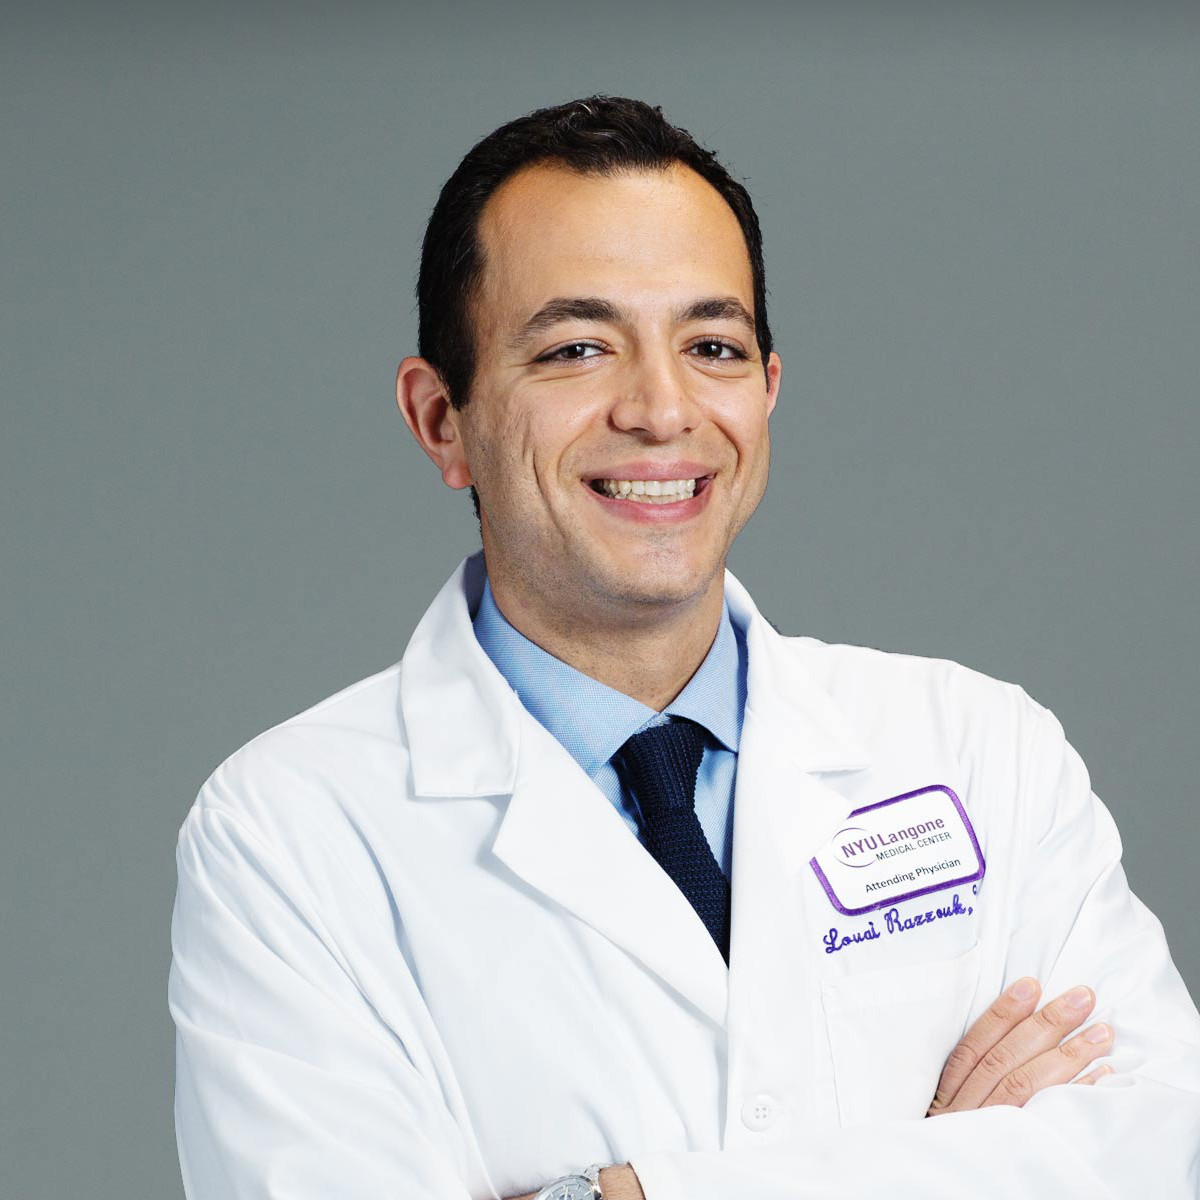 Louai Razzouk,MD, MPH. Interventional Cardiology, Cardiology